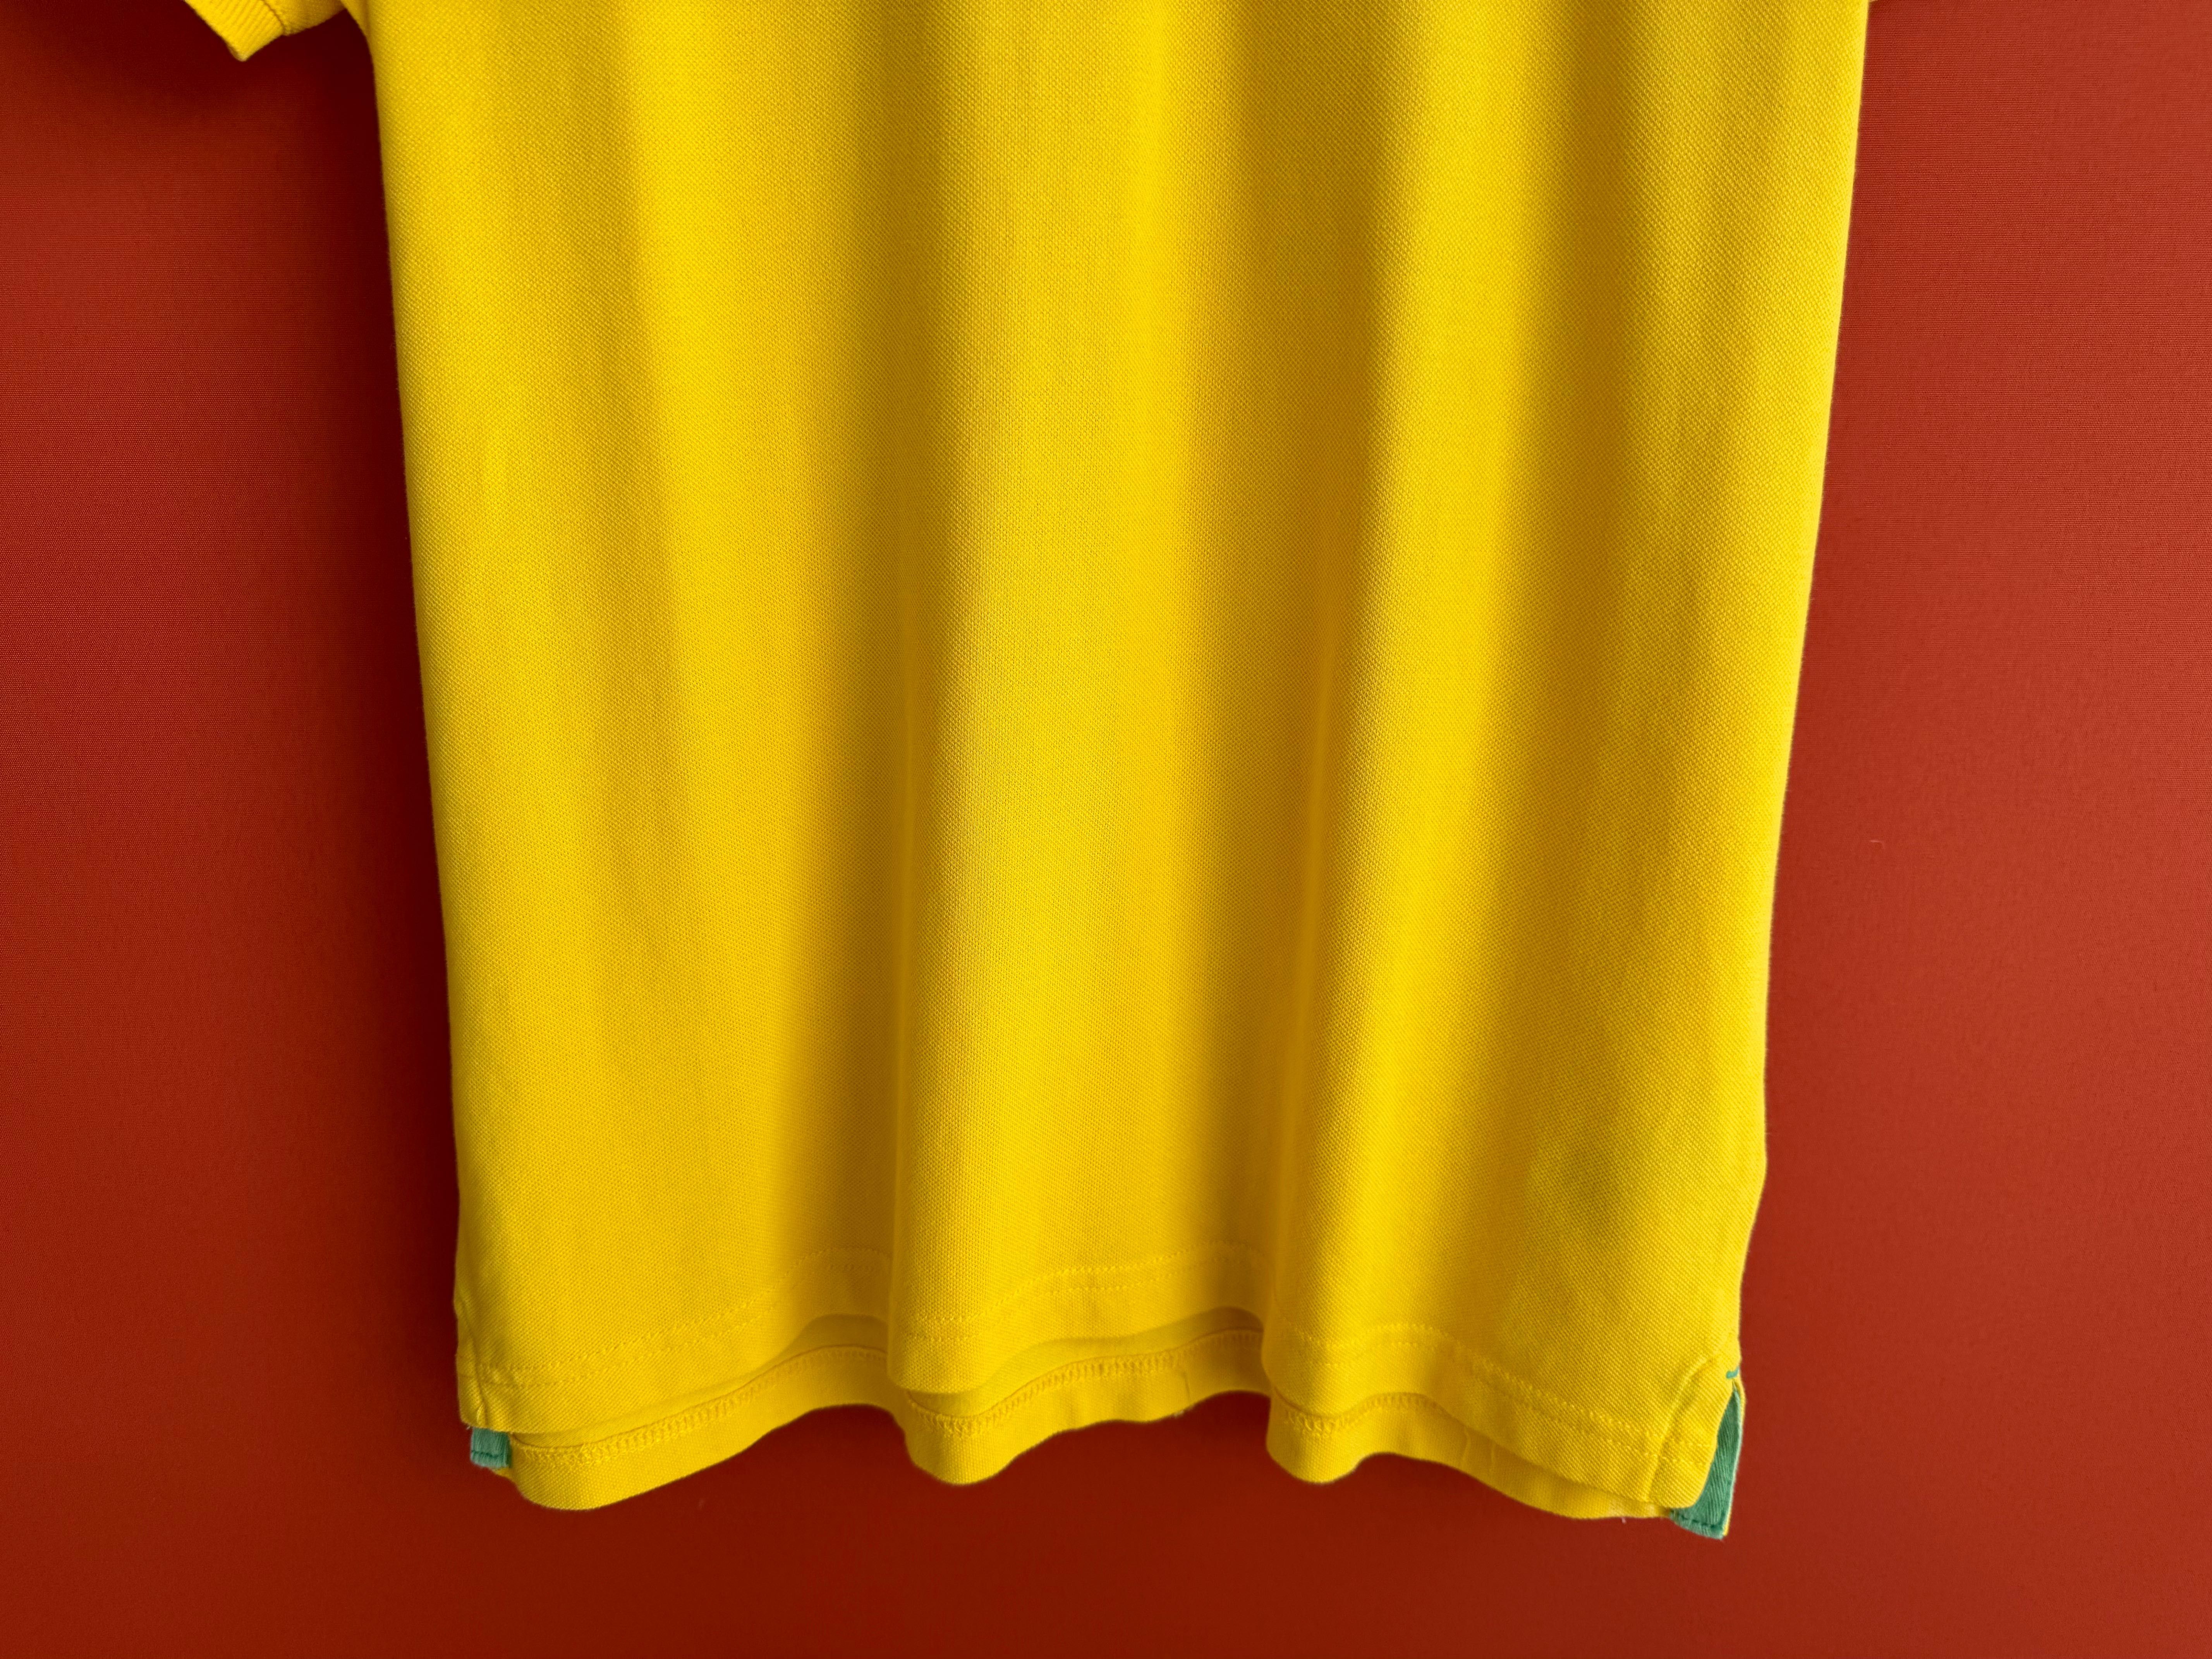 U.S. Polo Assn. USPA мужская футболка с воротником поло размер S Б У